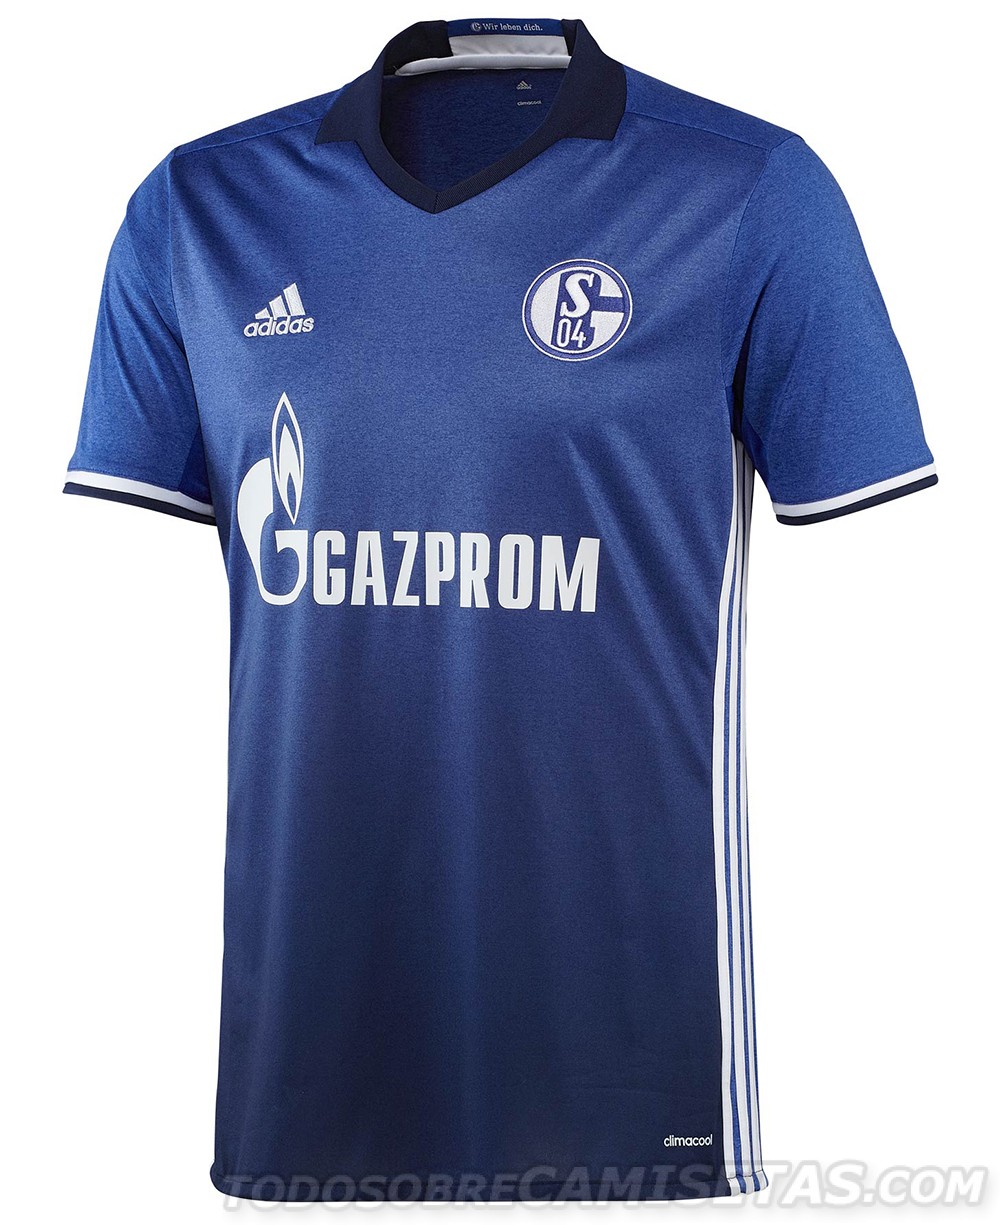 Schalke 04 16 17 adidas home kit 